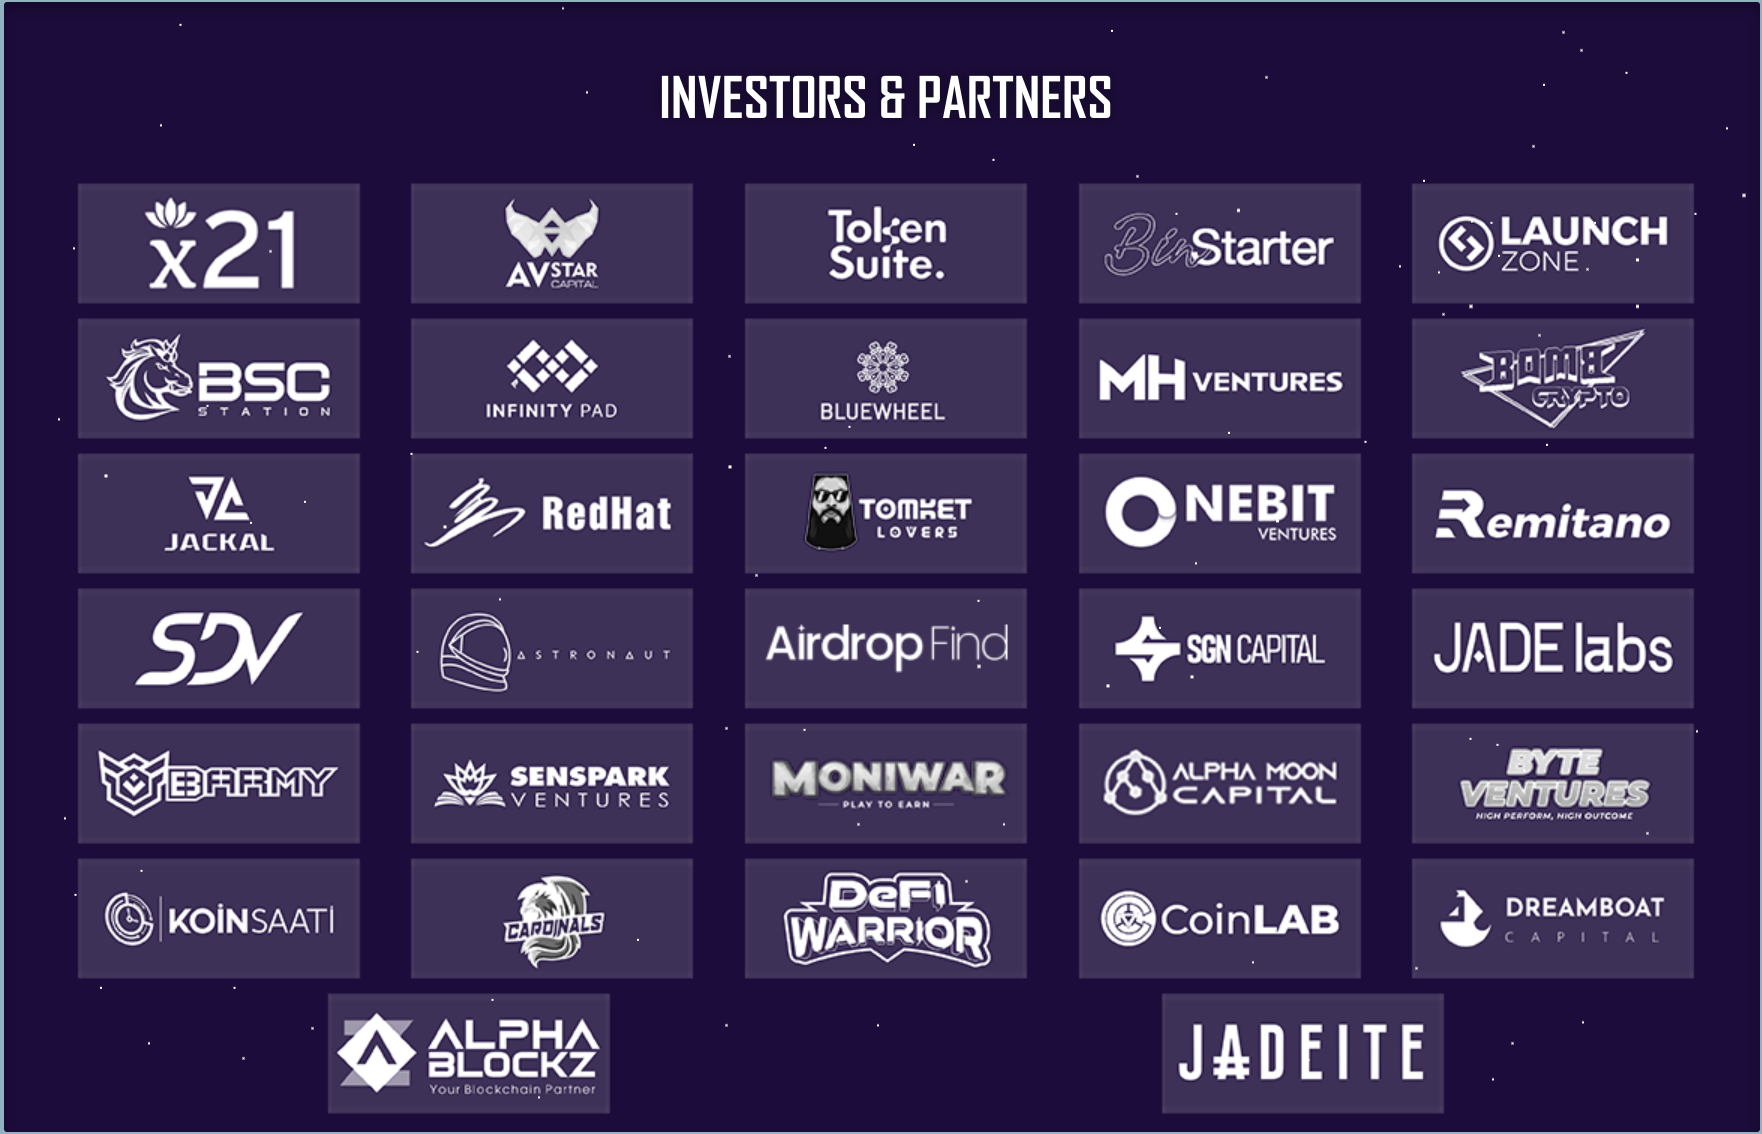 luna-rush-investors-partners